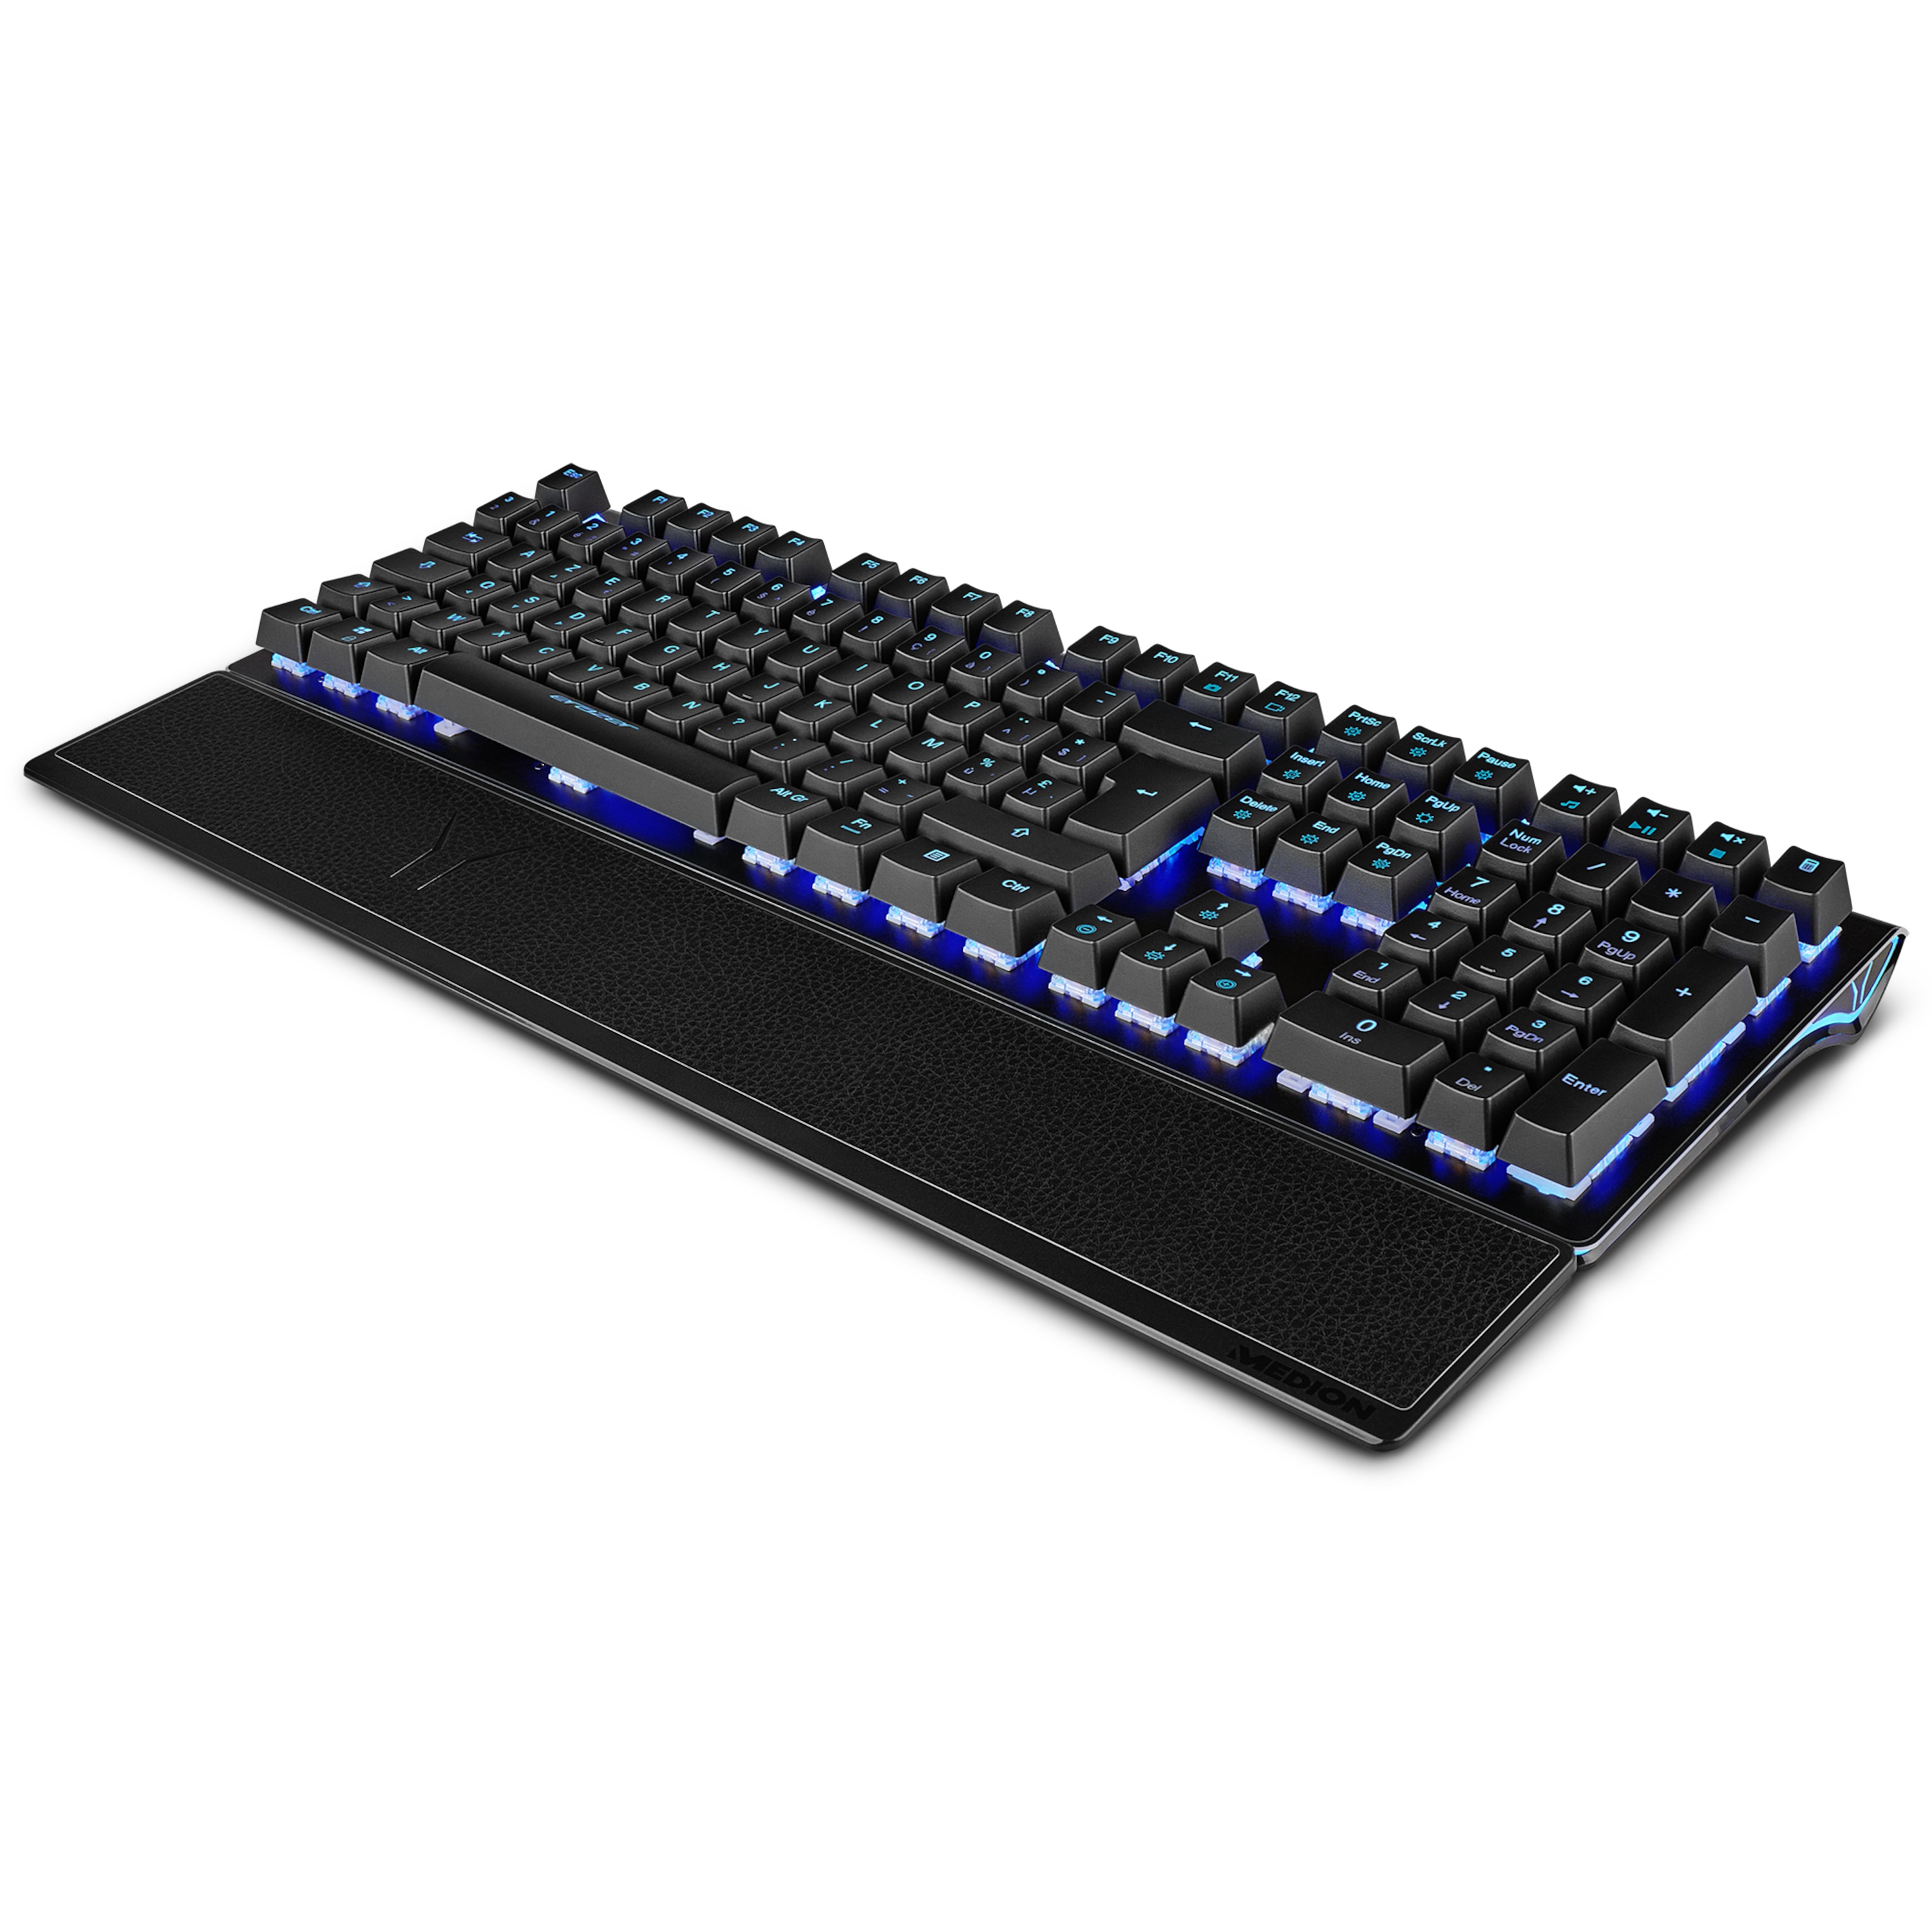 Medion Erazer X81699 - Mechanisch gaming keyboard - Qwerty - Zwart